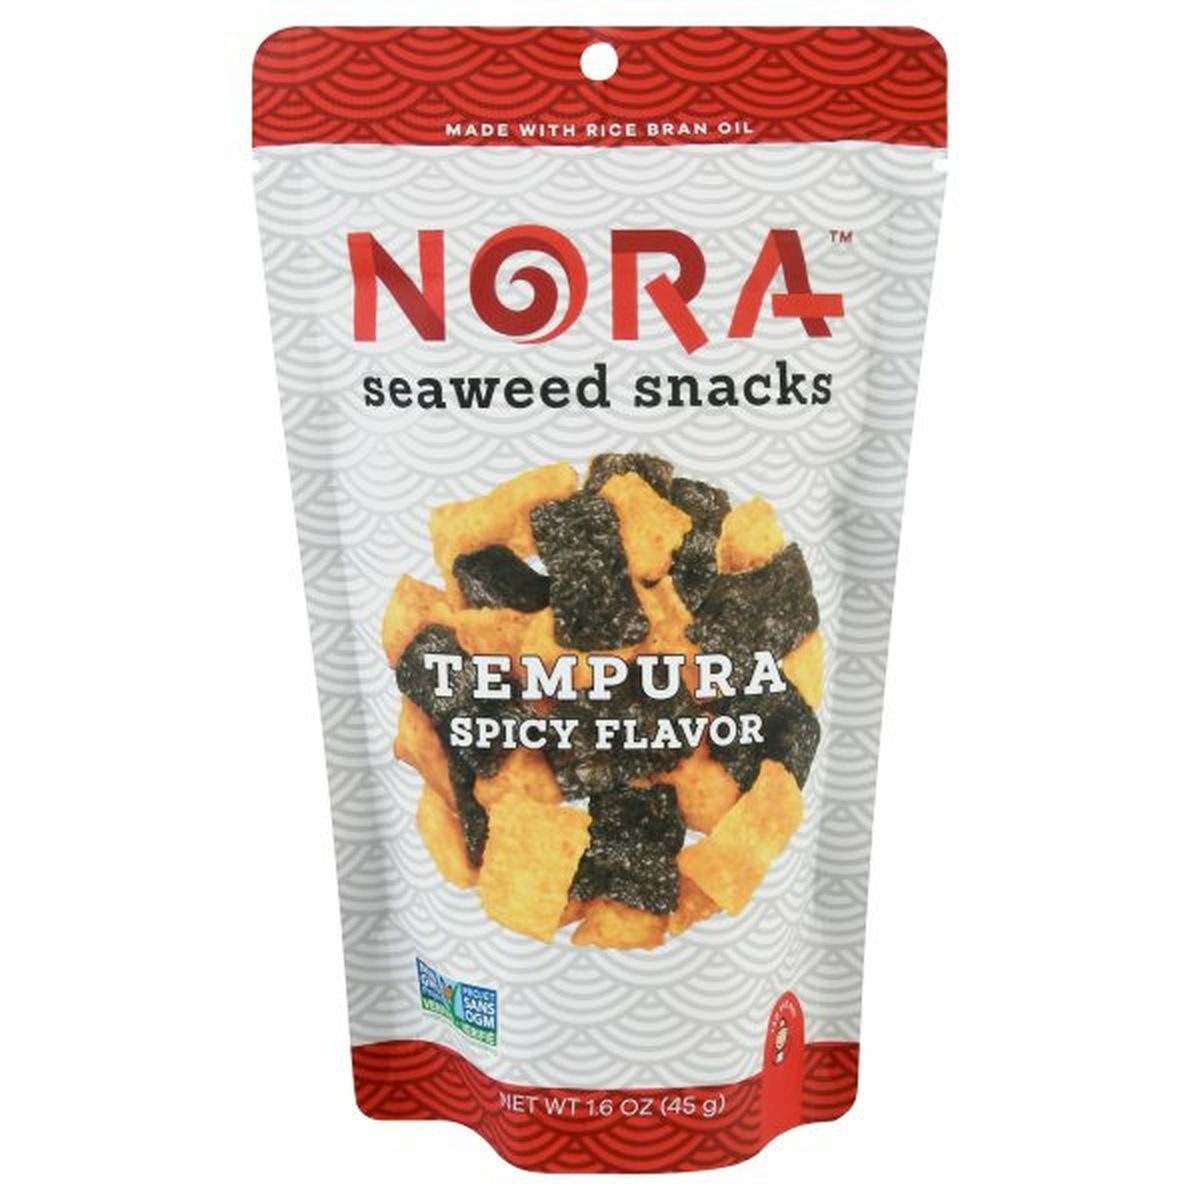 Calories in Nora Seaweed Snacks, Spicy Flavor, Tempura